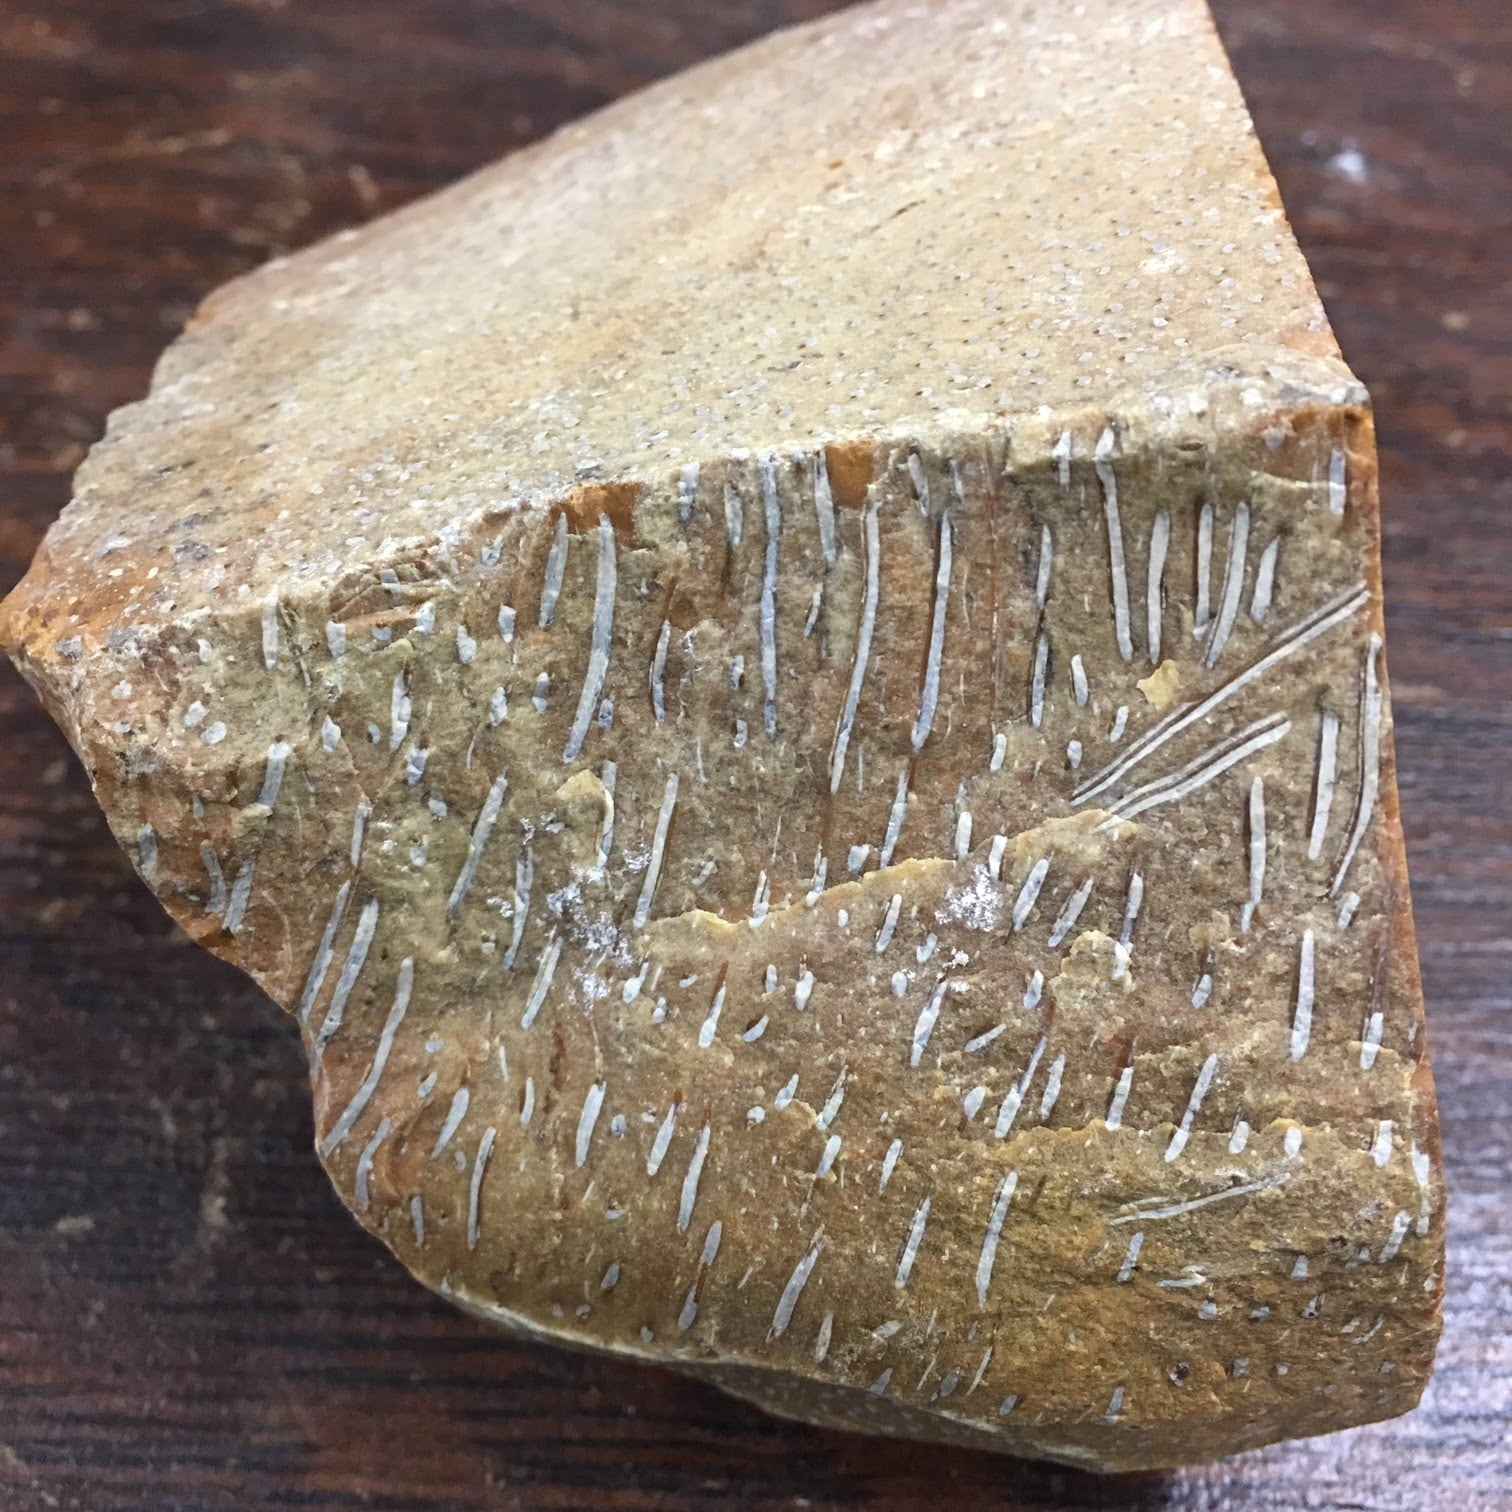 #PL1 Palm Petrified Wood Specimen - paleobotonist says probably from North Carolina